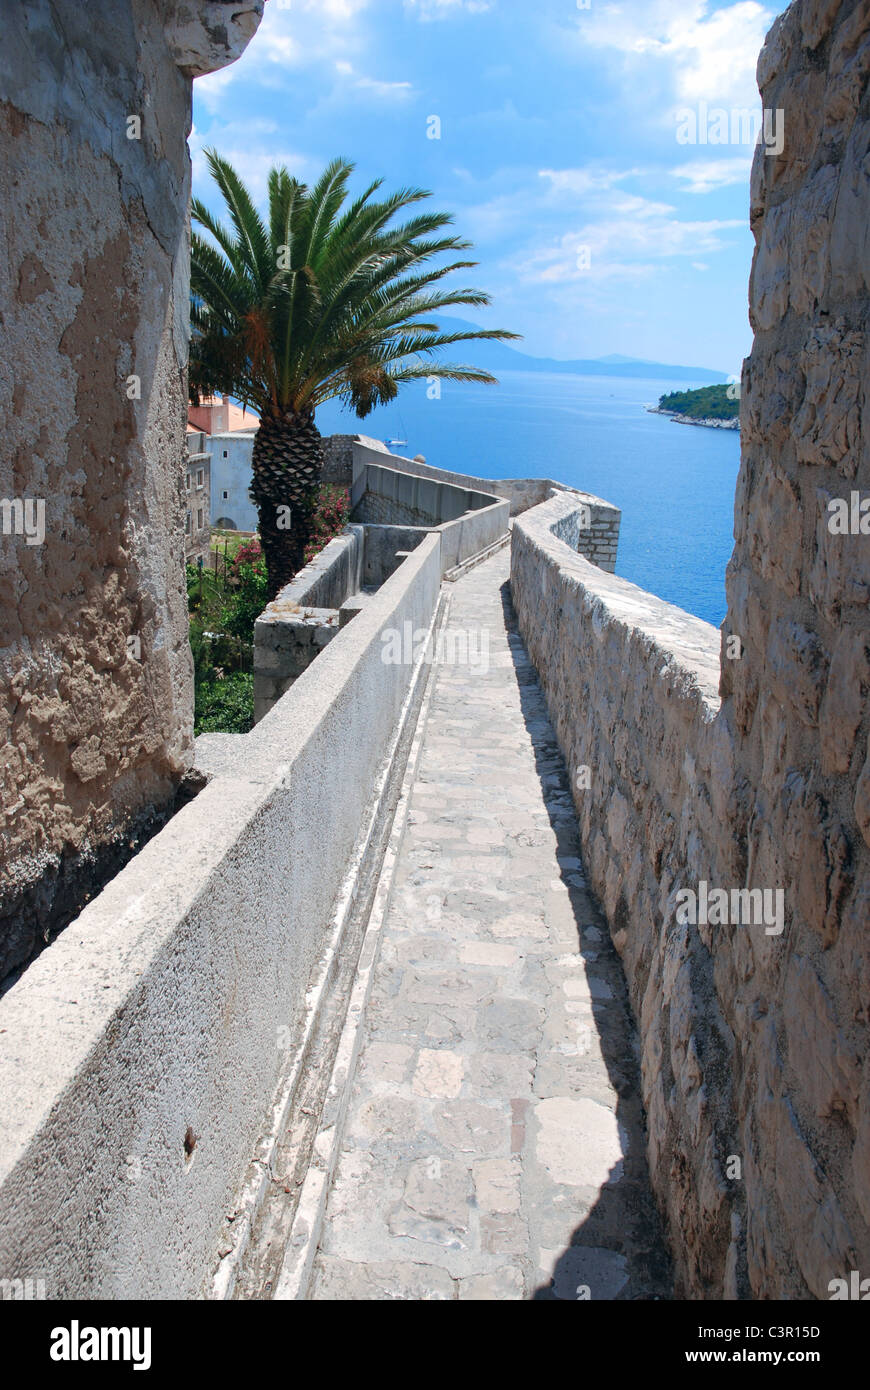 Castle, sea, palm tree, Dubrovnik. Stock Photo